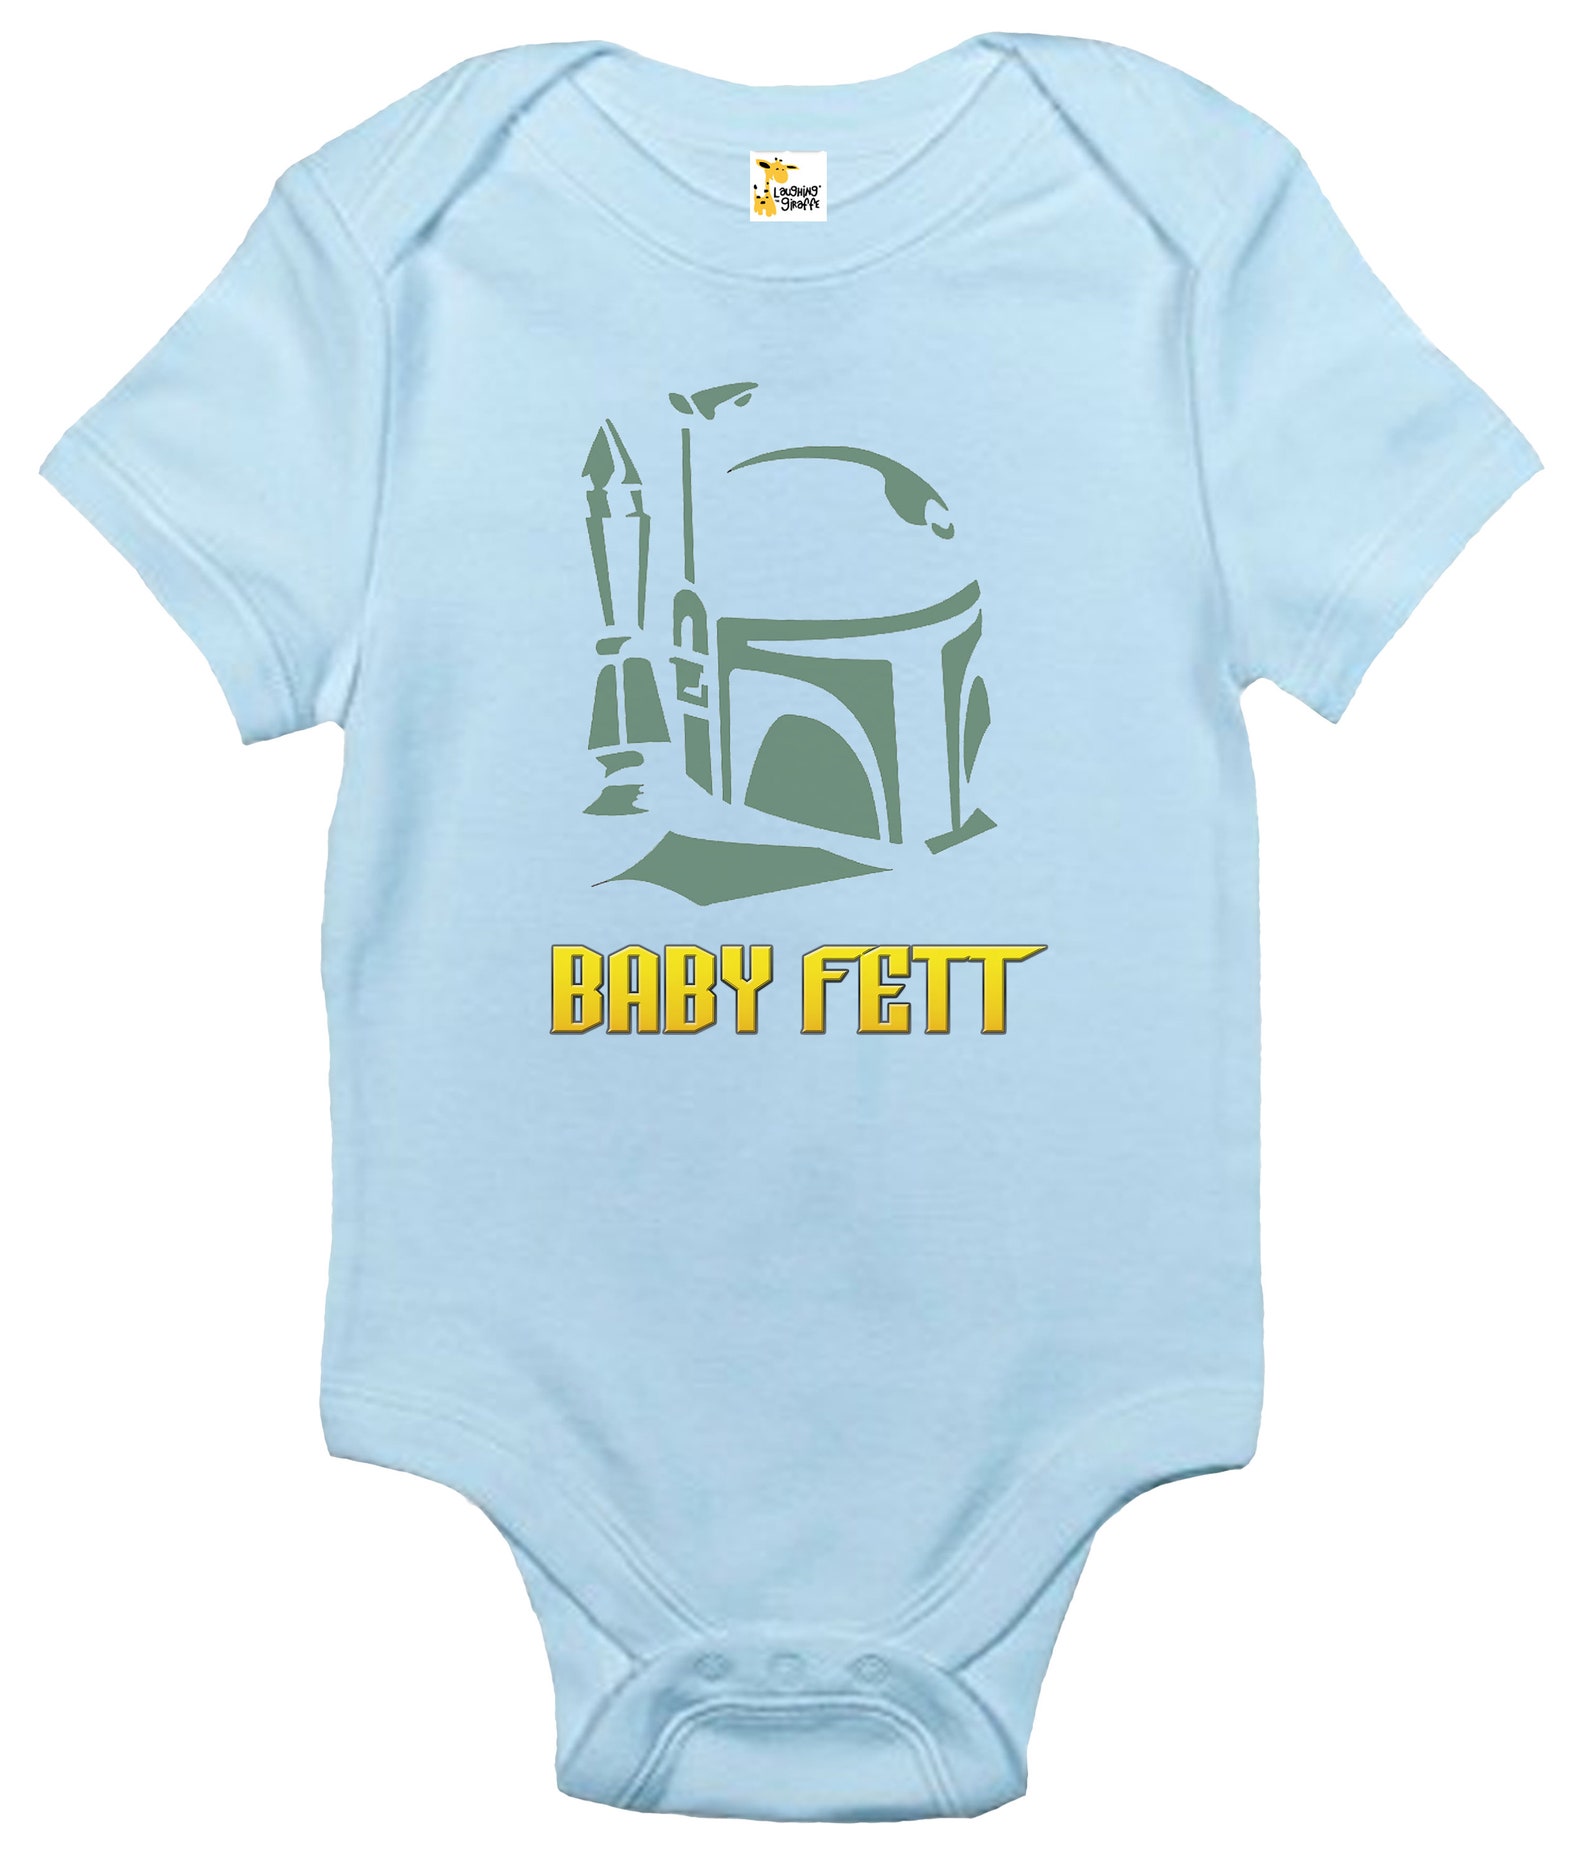 Baby Bodysuit Baby Fett Cute Star Wars Themed Baby Clothes | Etsy